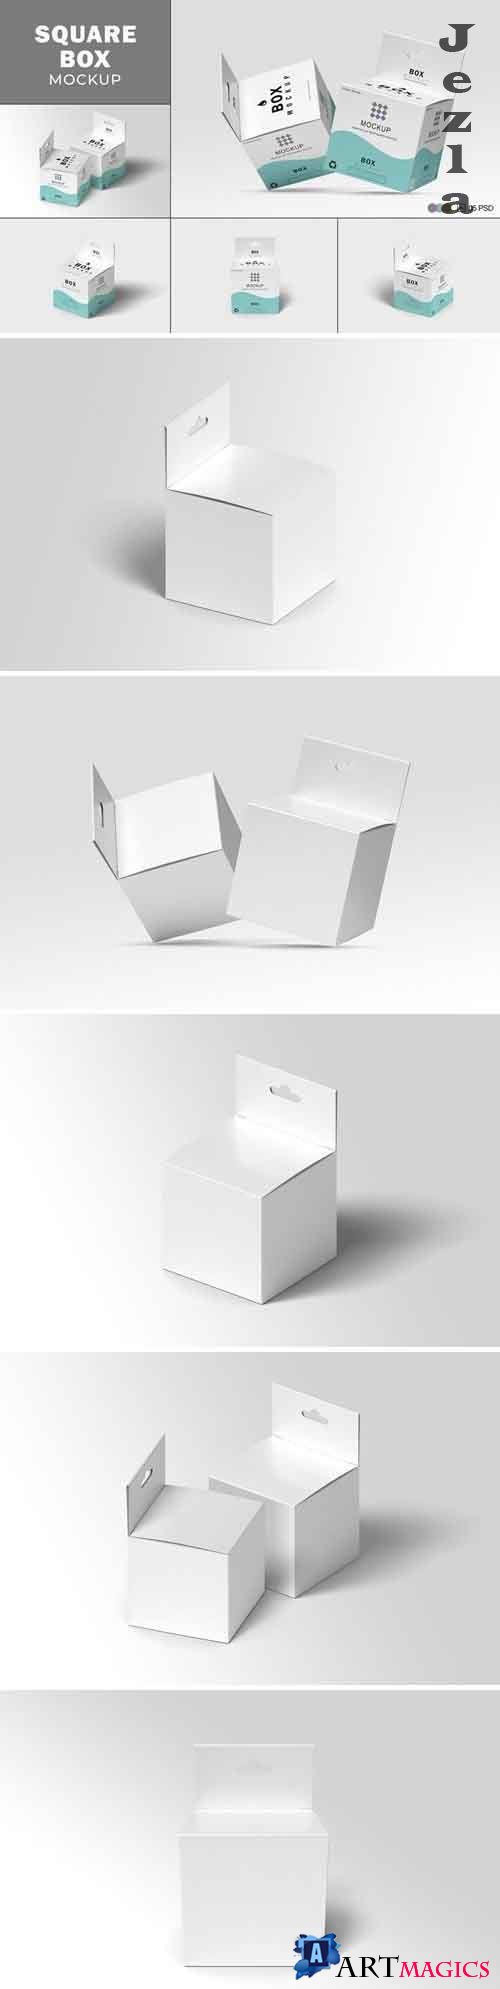 Square Box Mockup Packaging